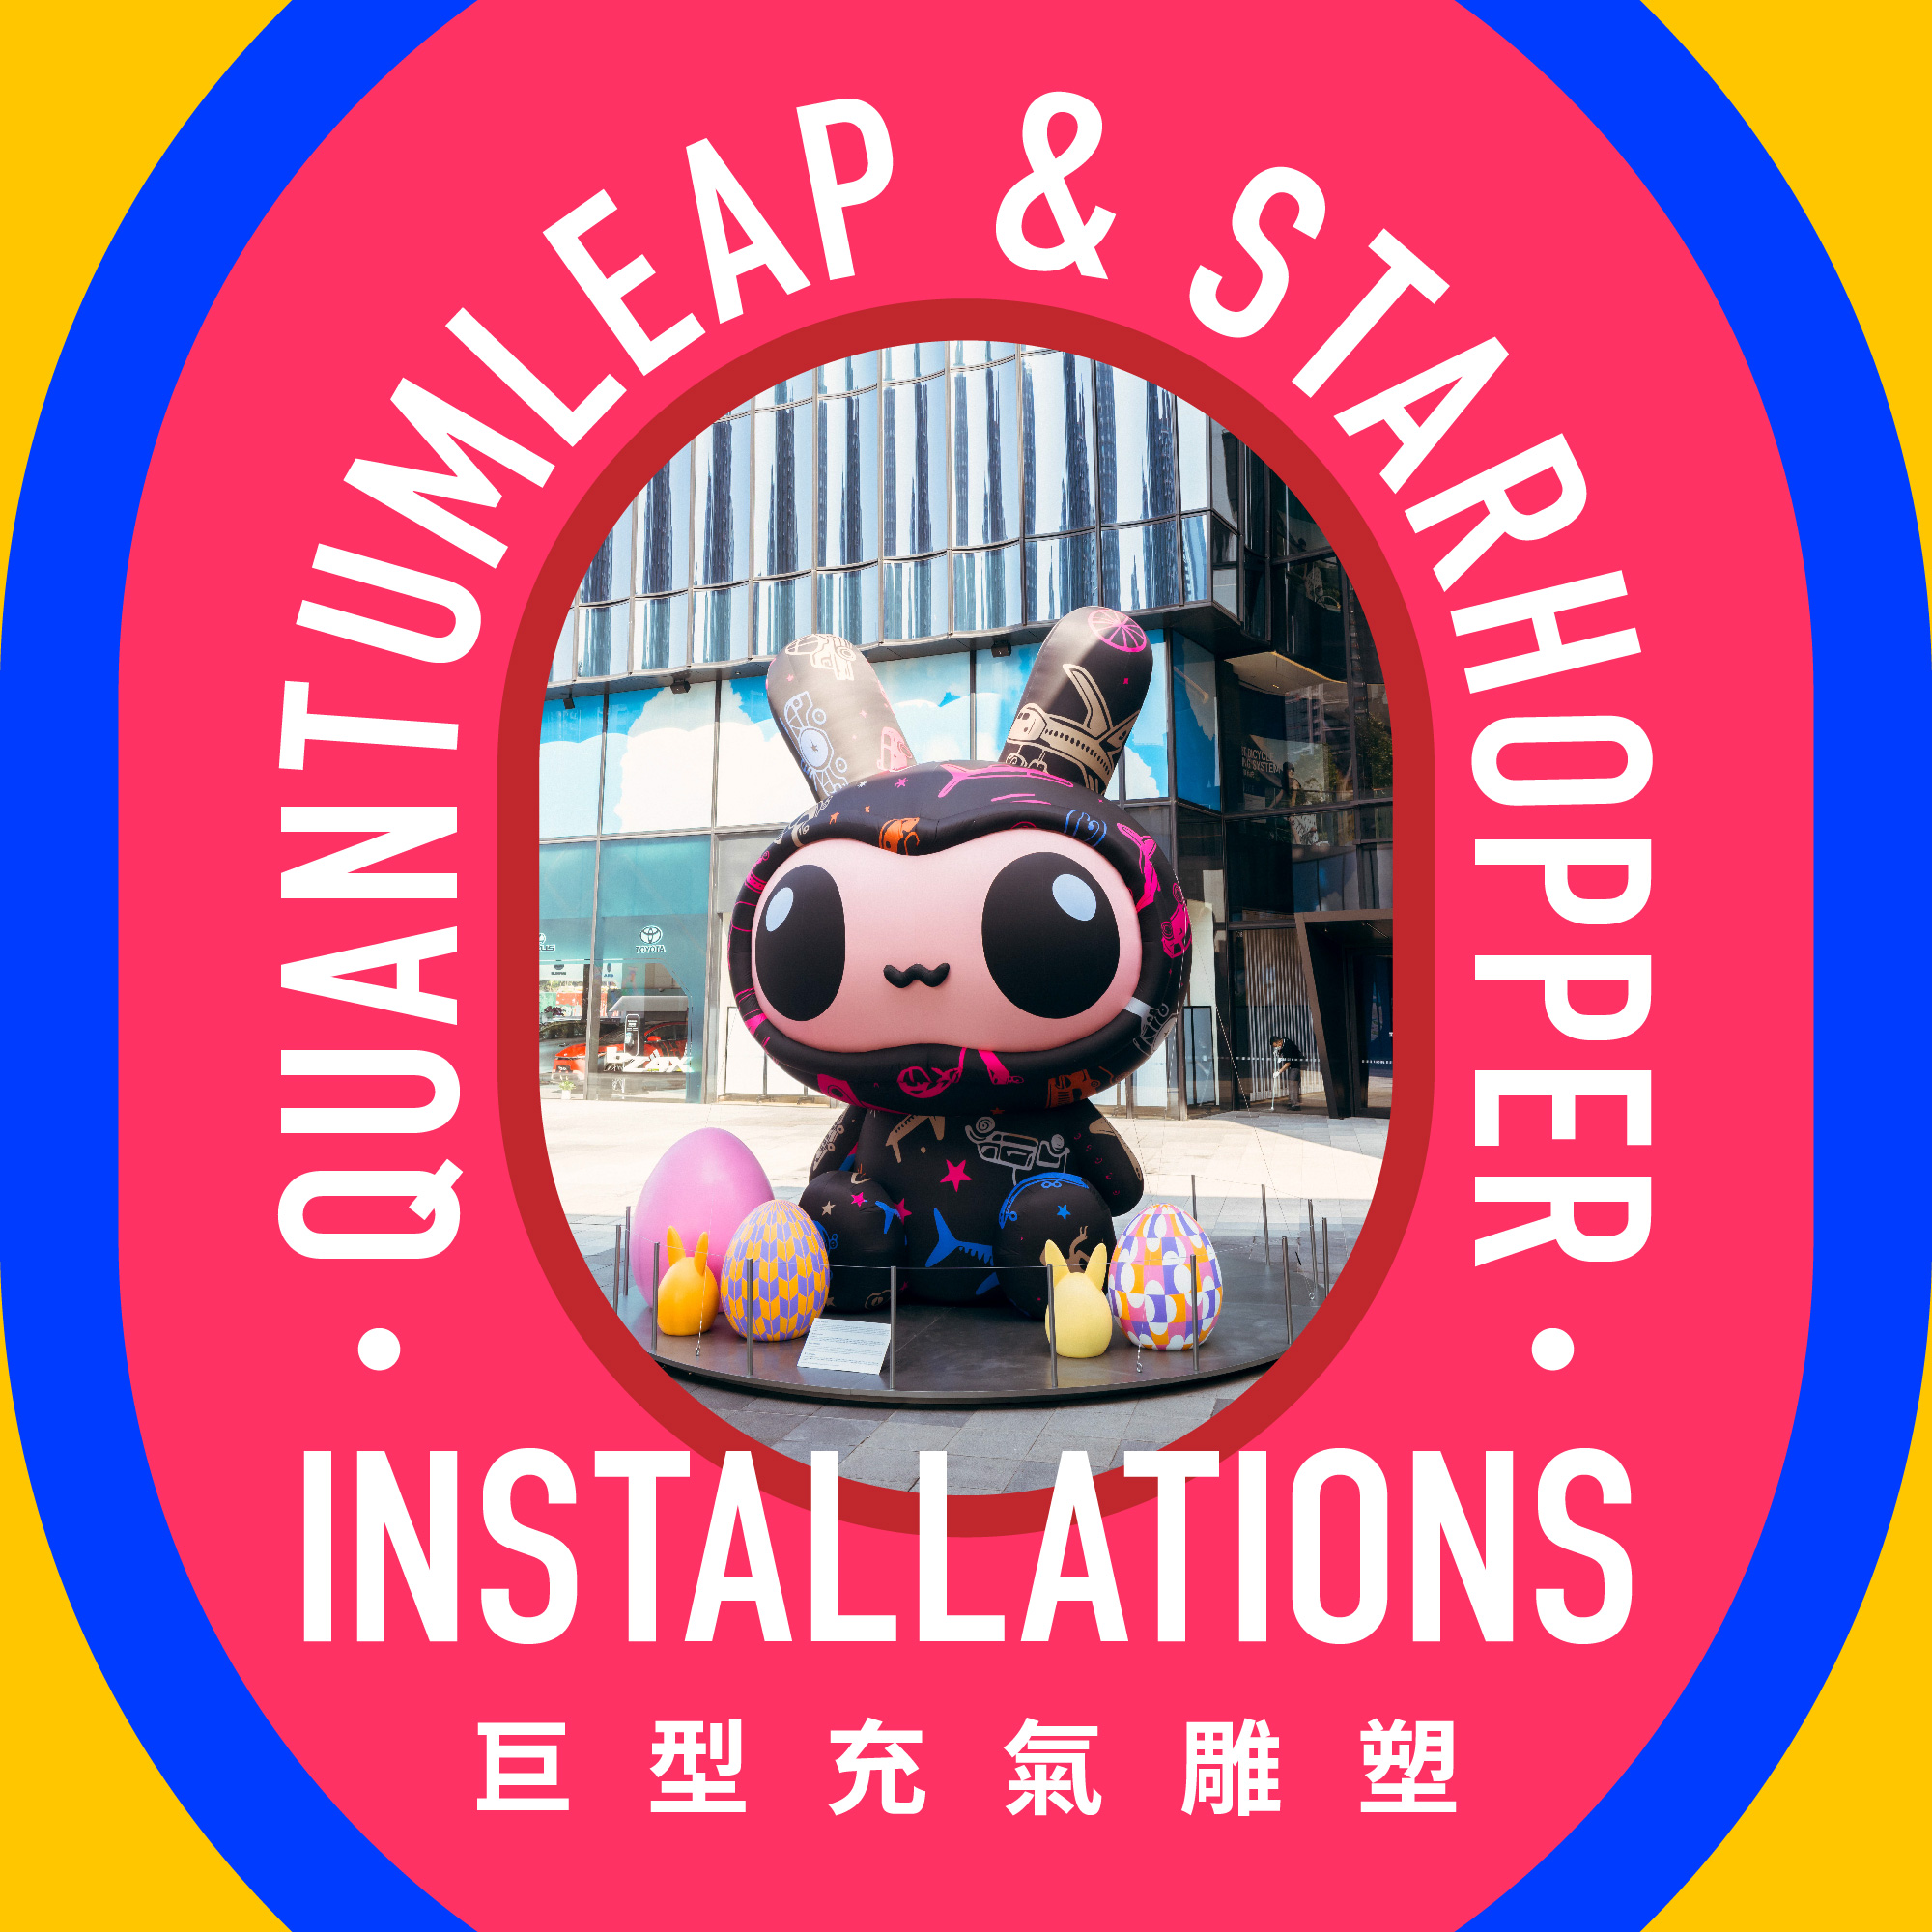 QuantumLeap ​& Starhopper 巨型充氣雕塑